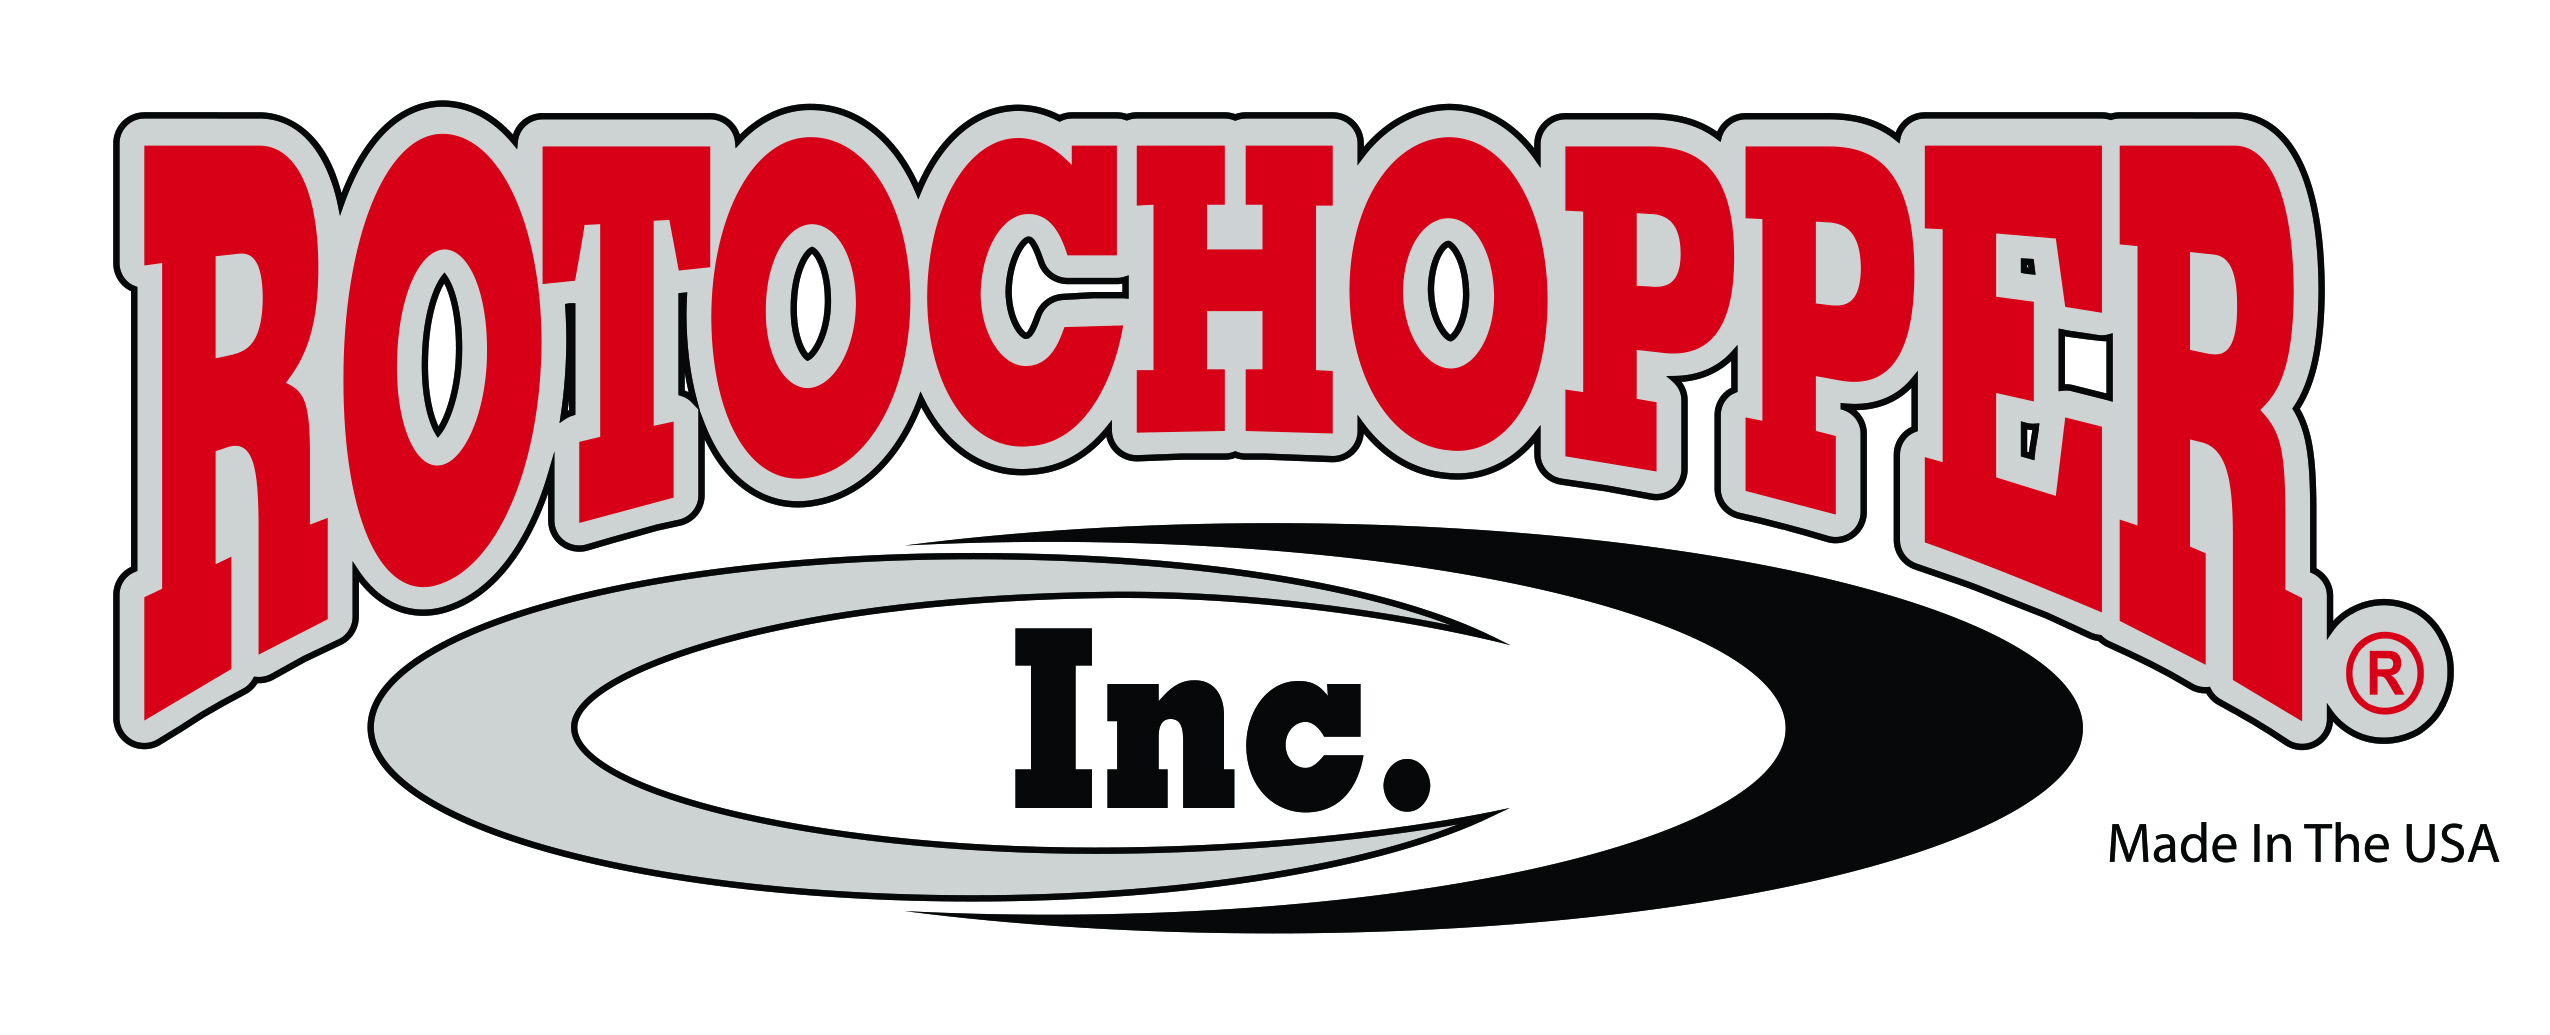 Rotochopper Logo